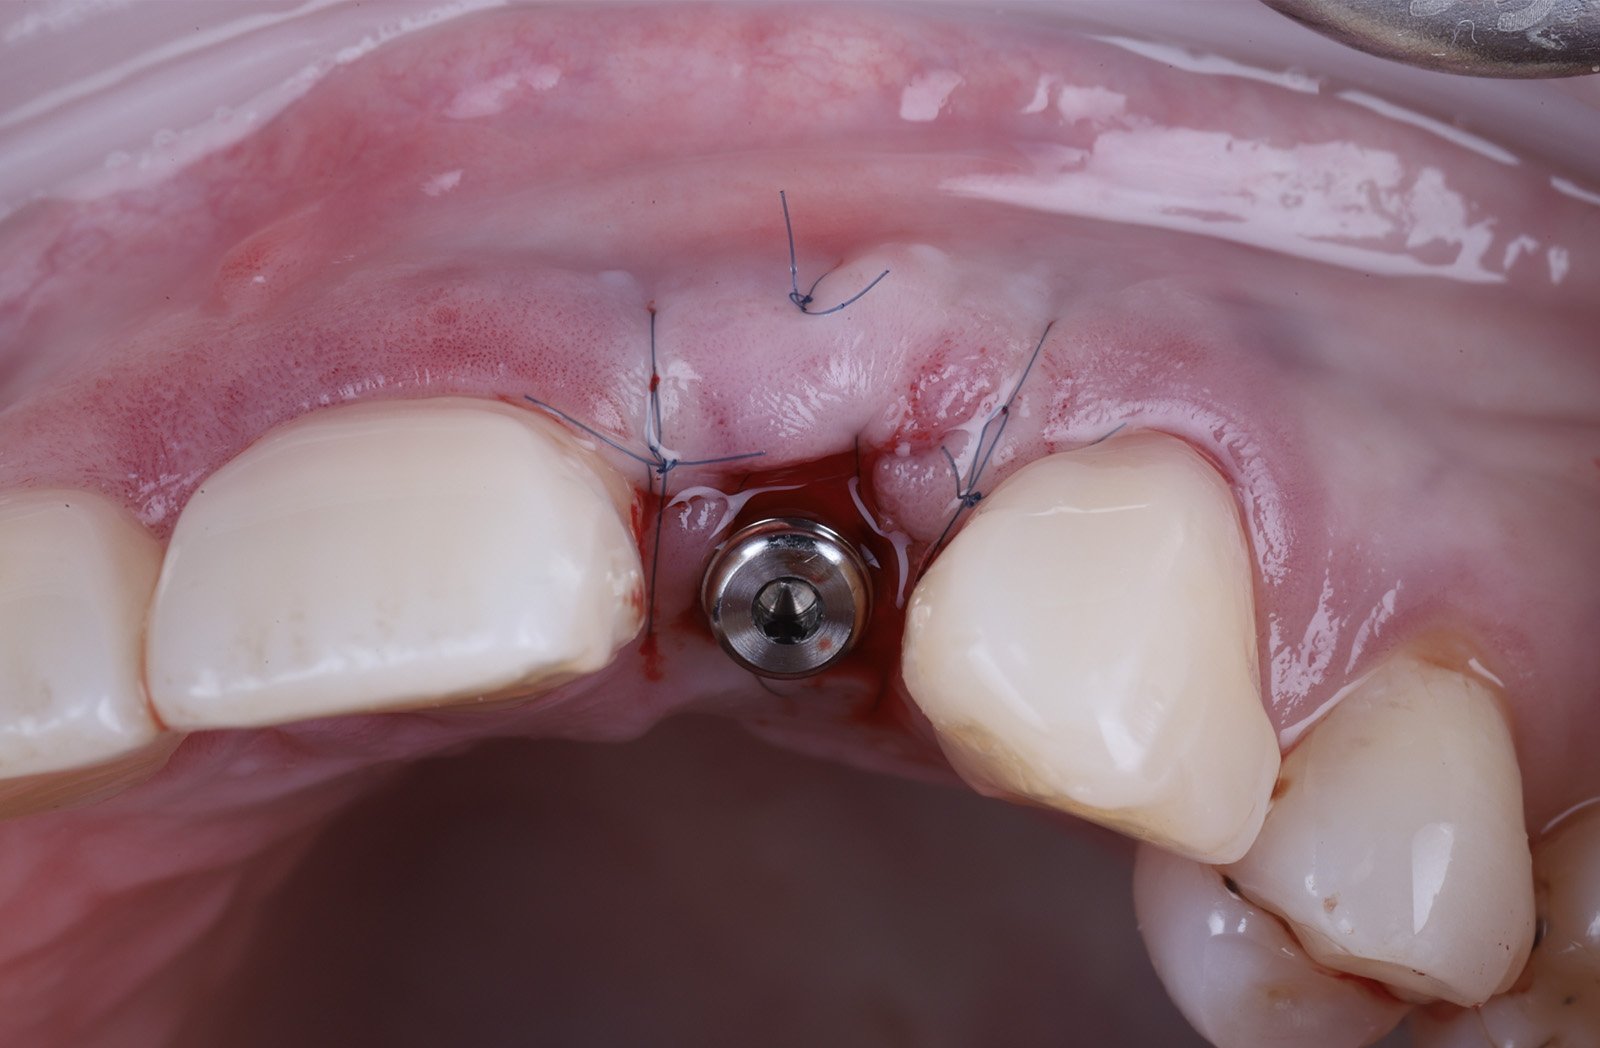 Implantology 2